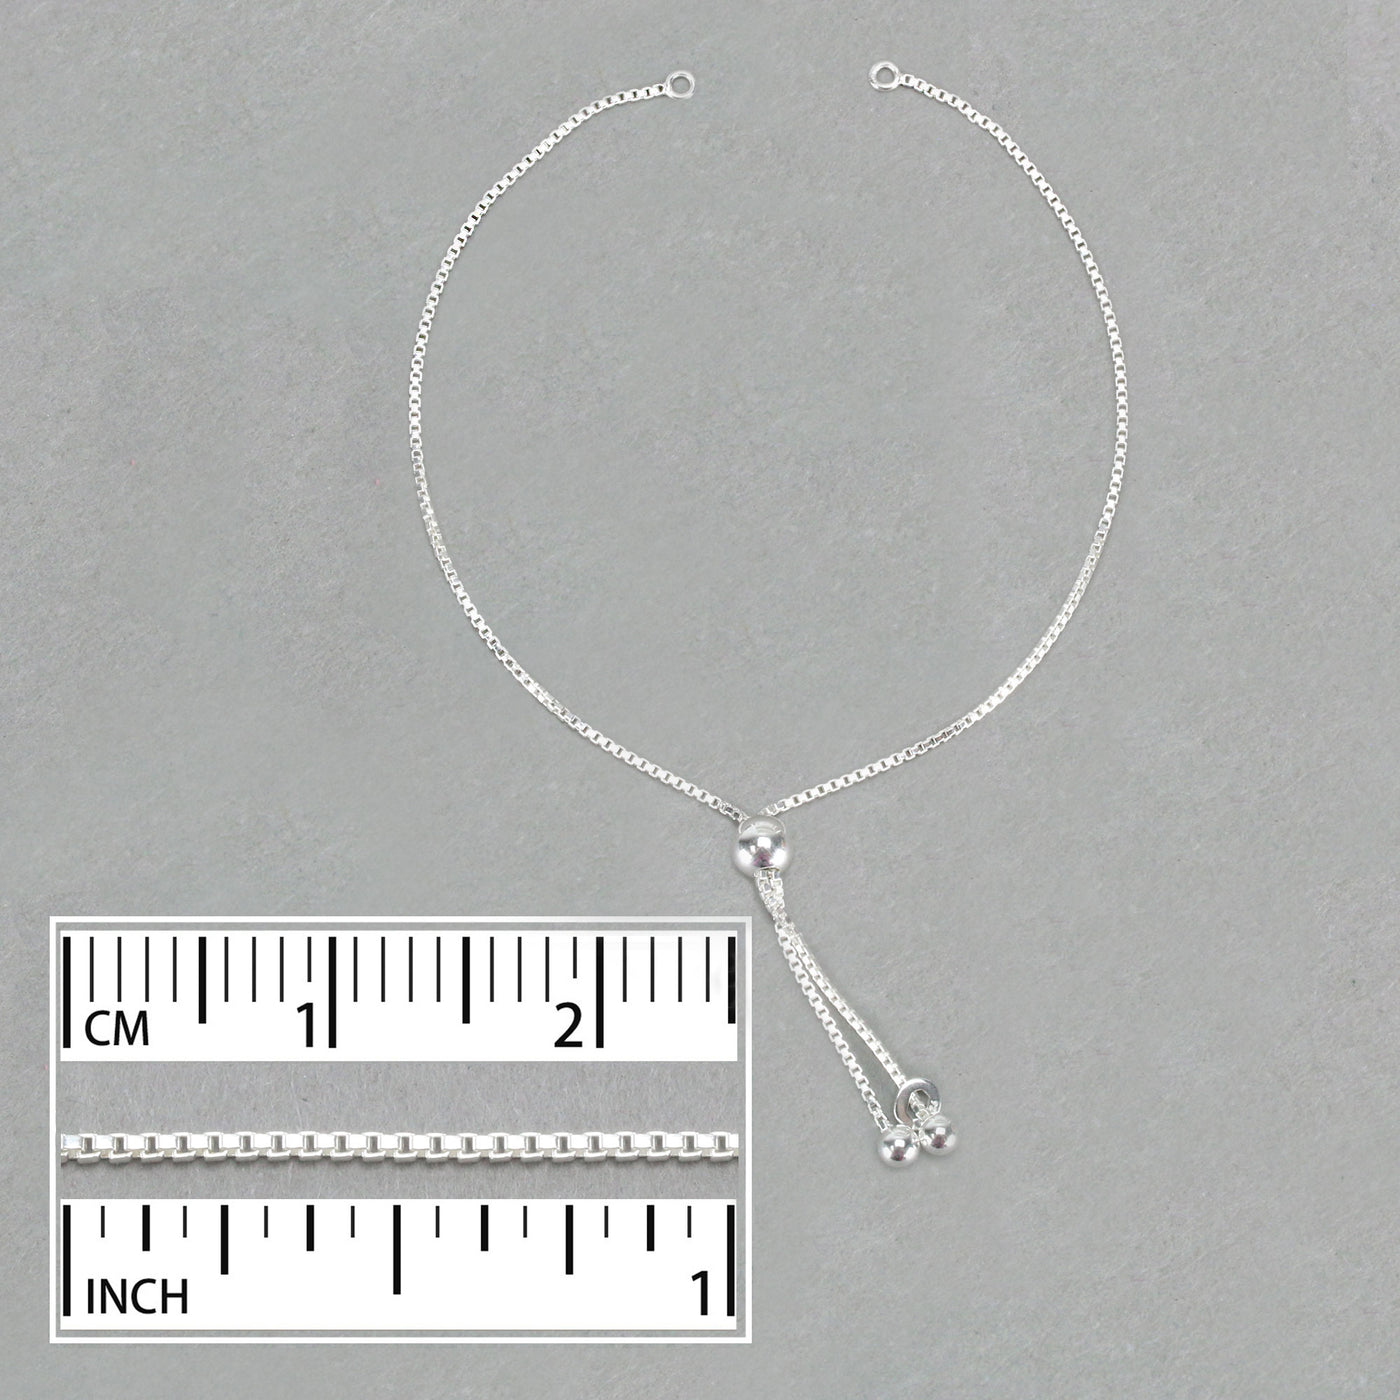 20 inch (50 cm) Adjustable 925 Silver chain